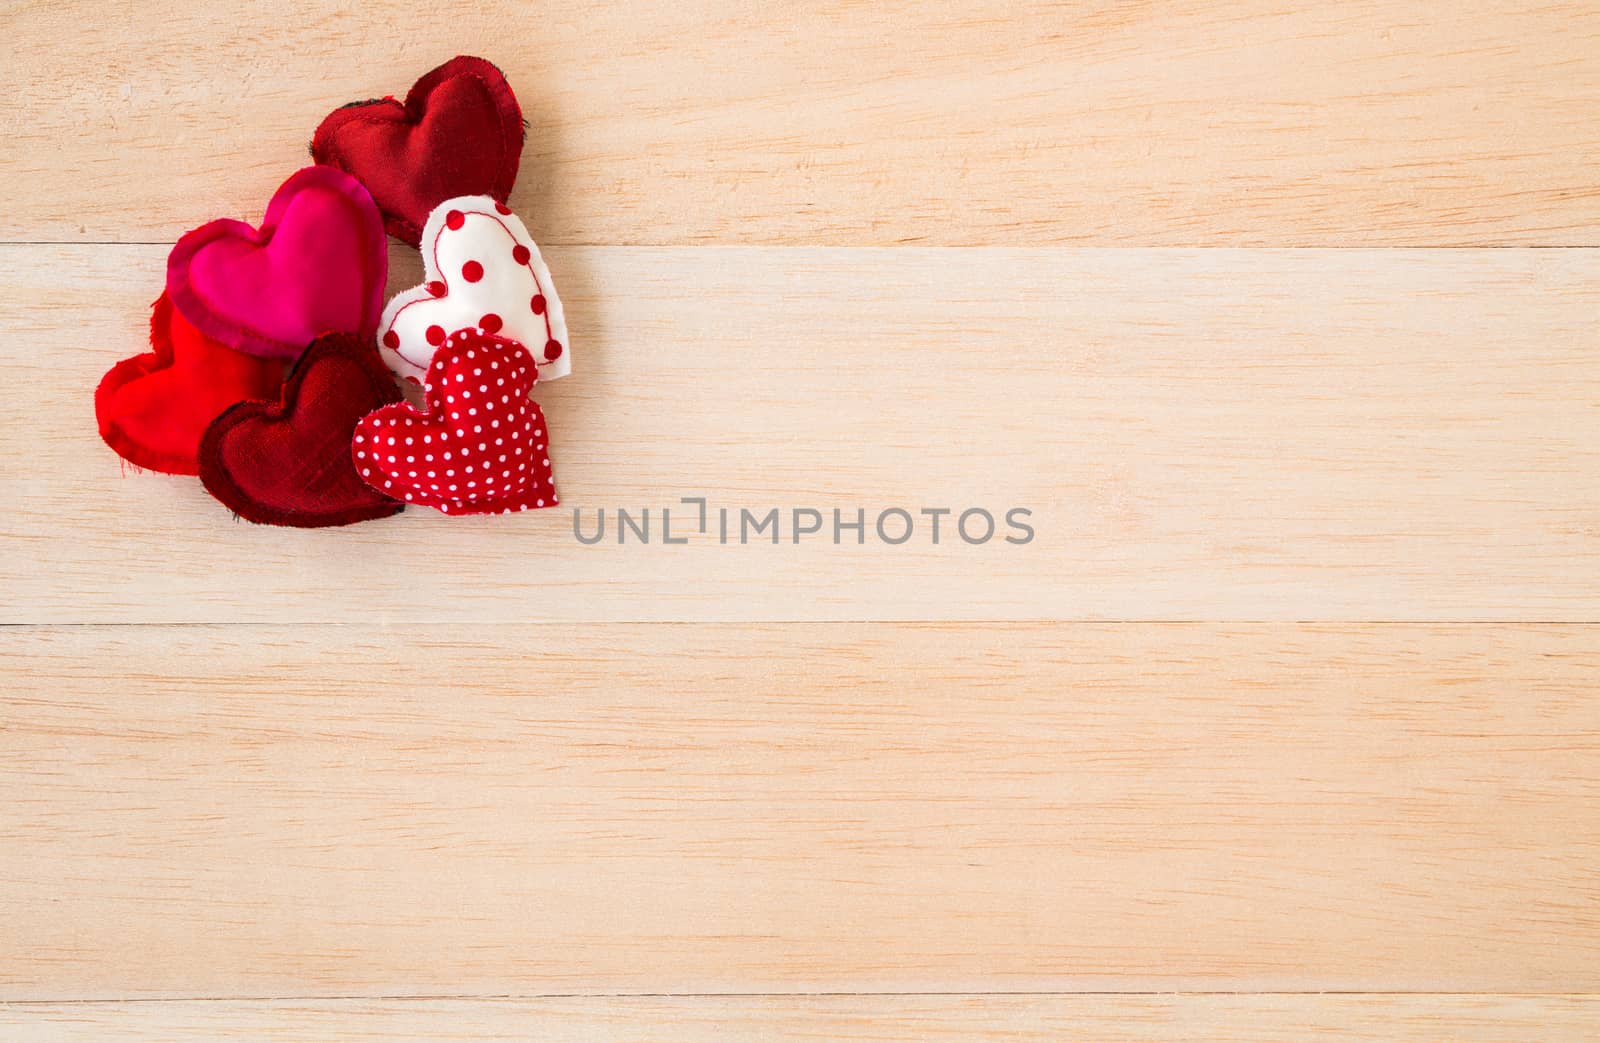 Red valentine hearts symbol on wood background by vinnstock